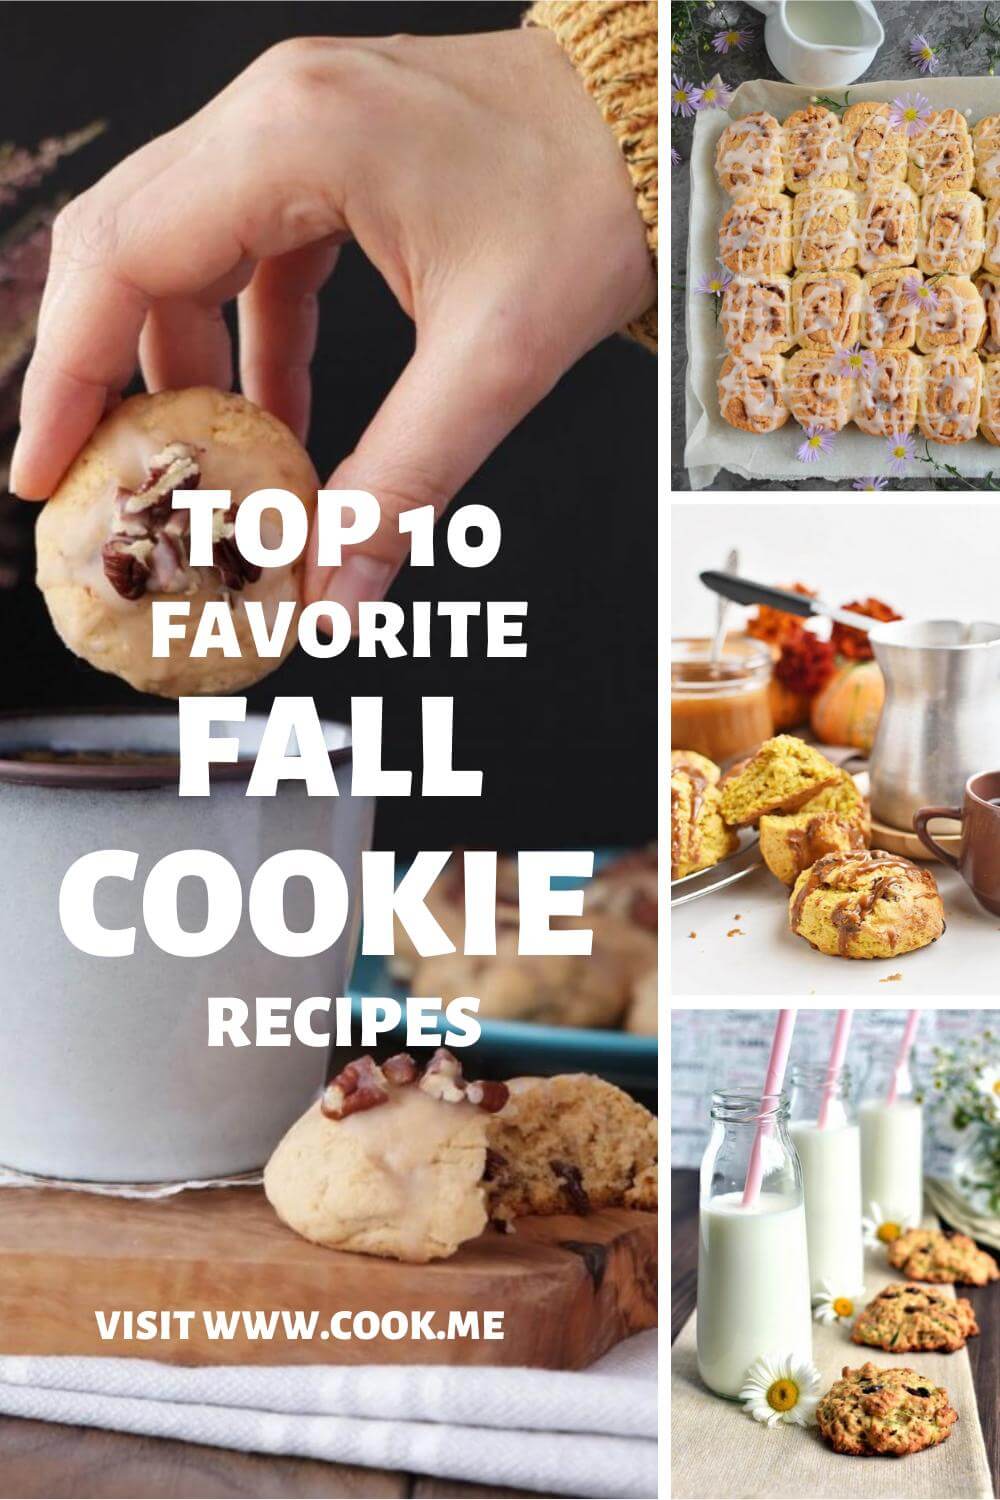 TOP 10 Fall Cookie Recipes - Cook.me Recipes